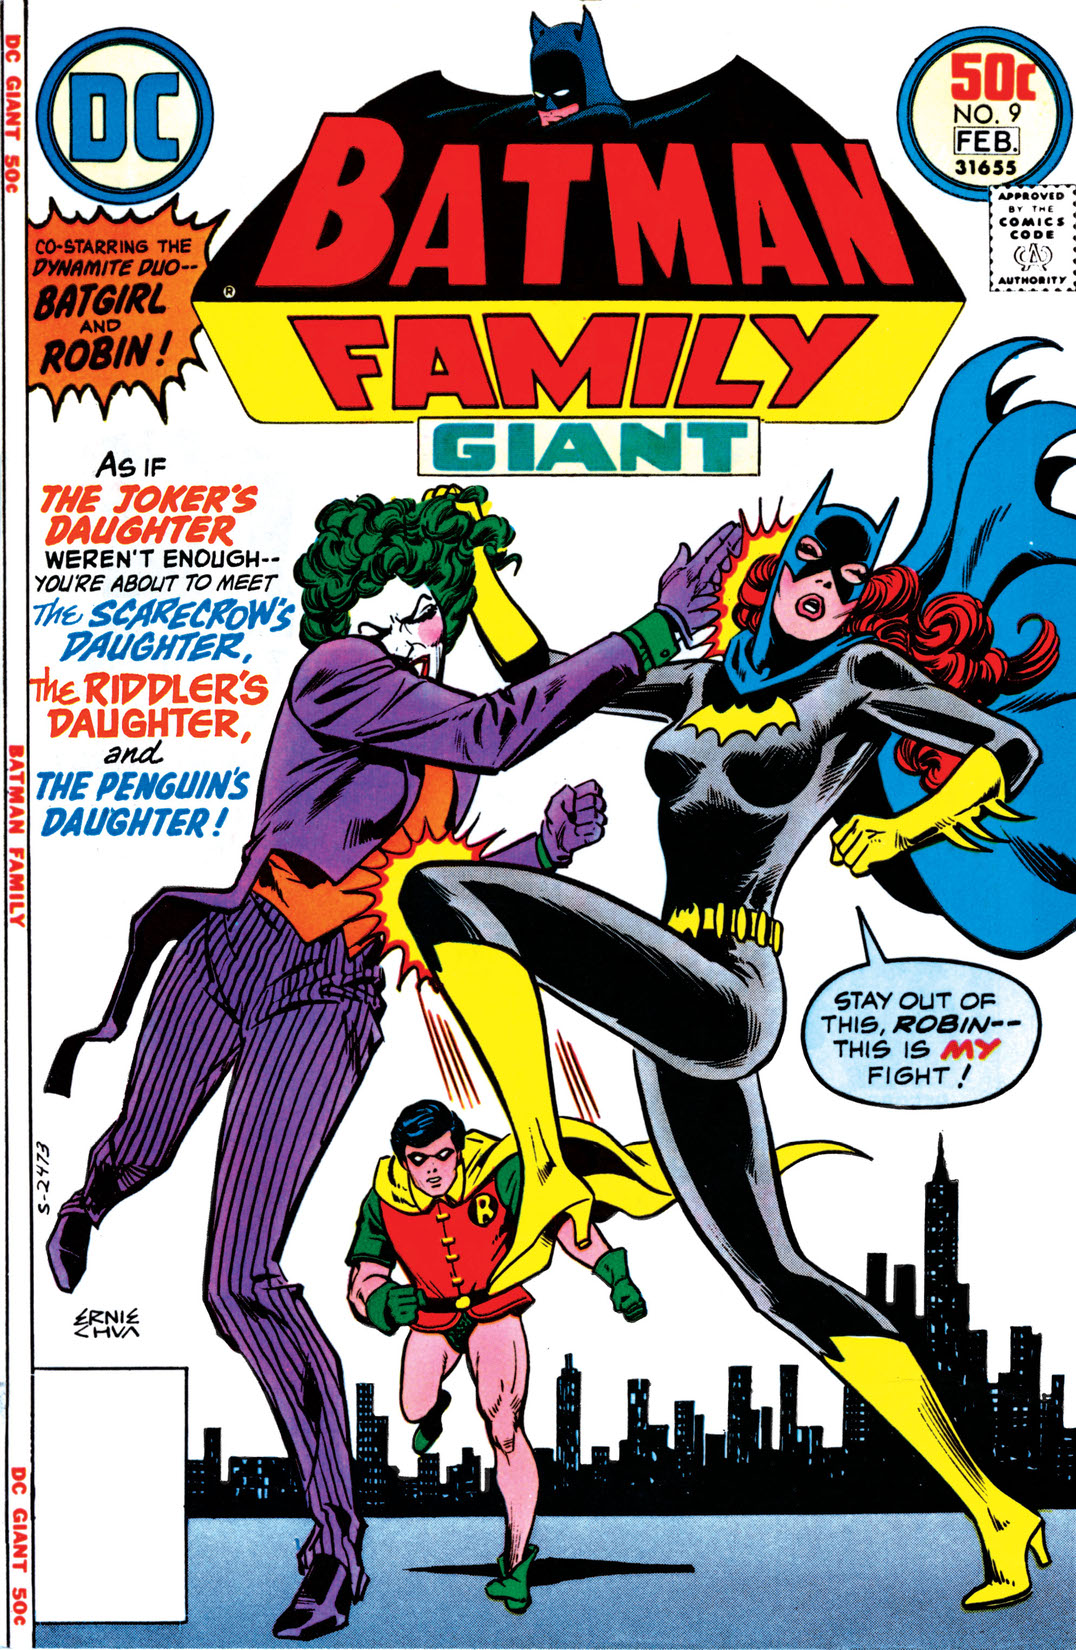 Batman Family #9 preview images